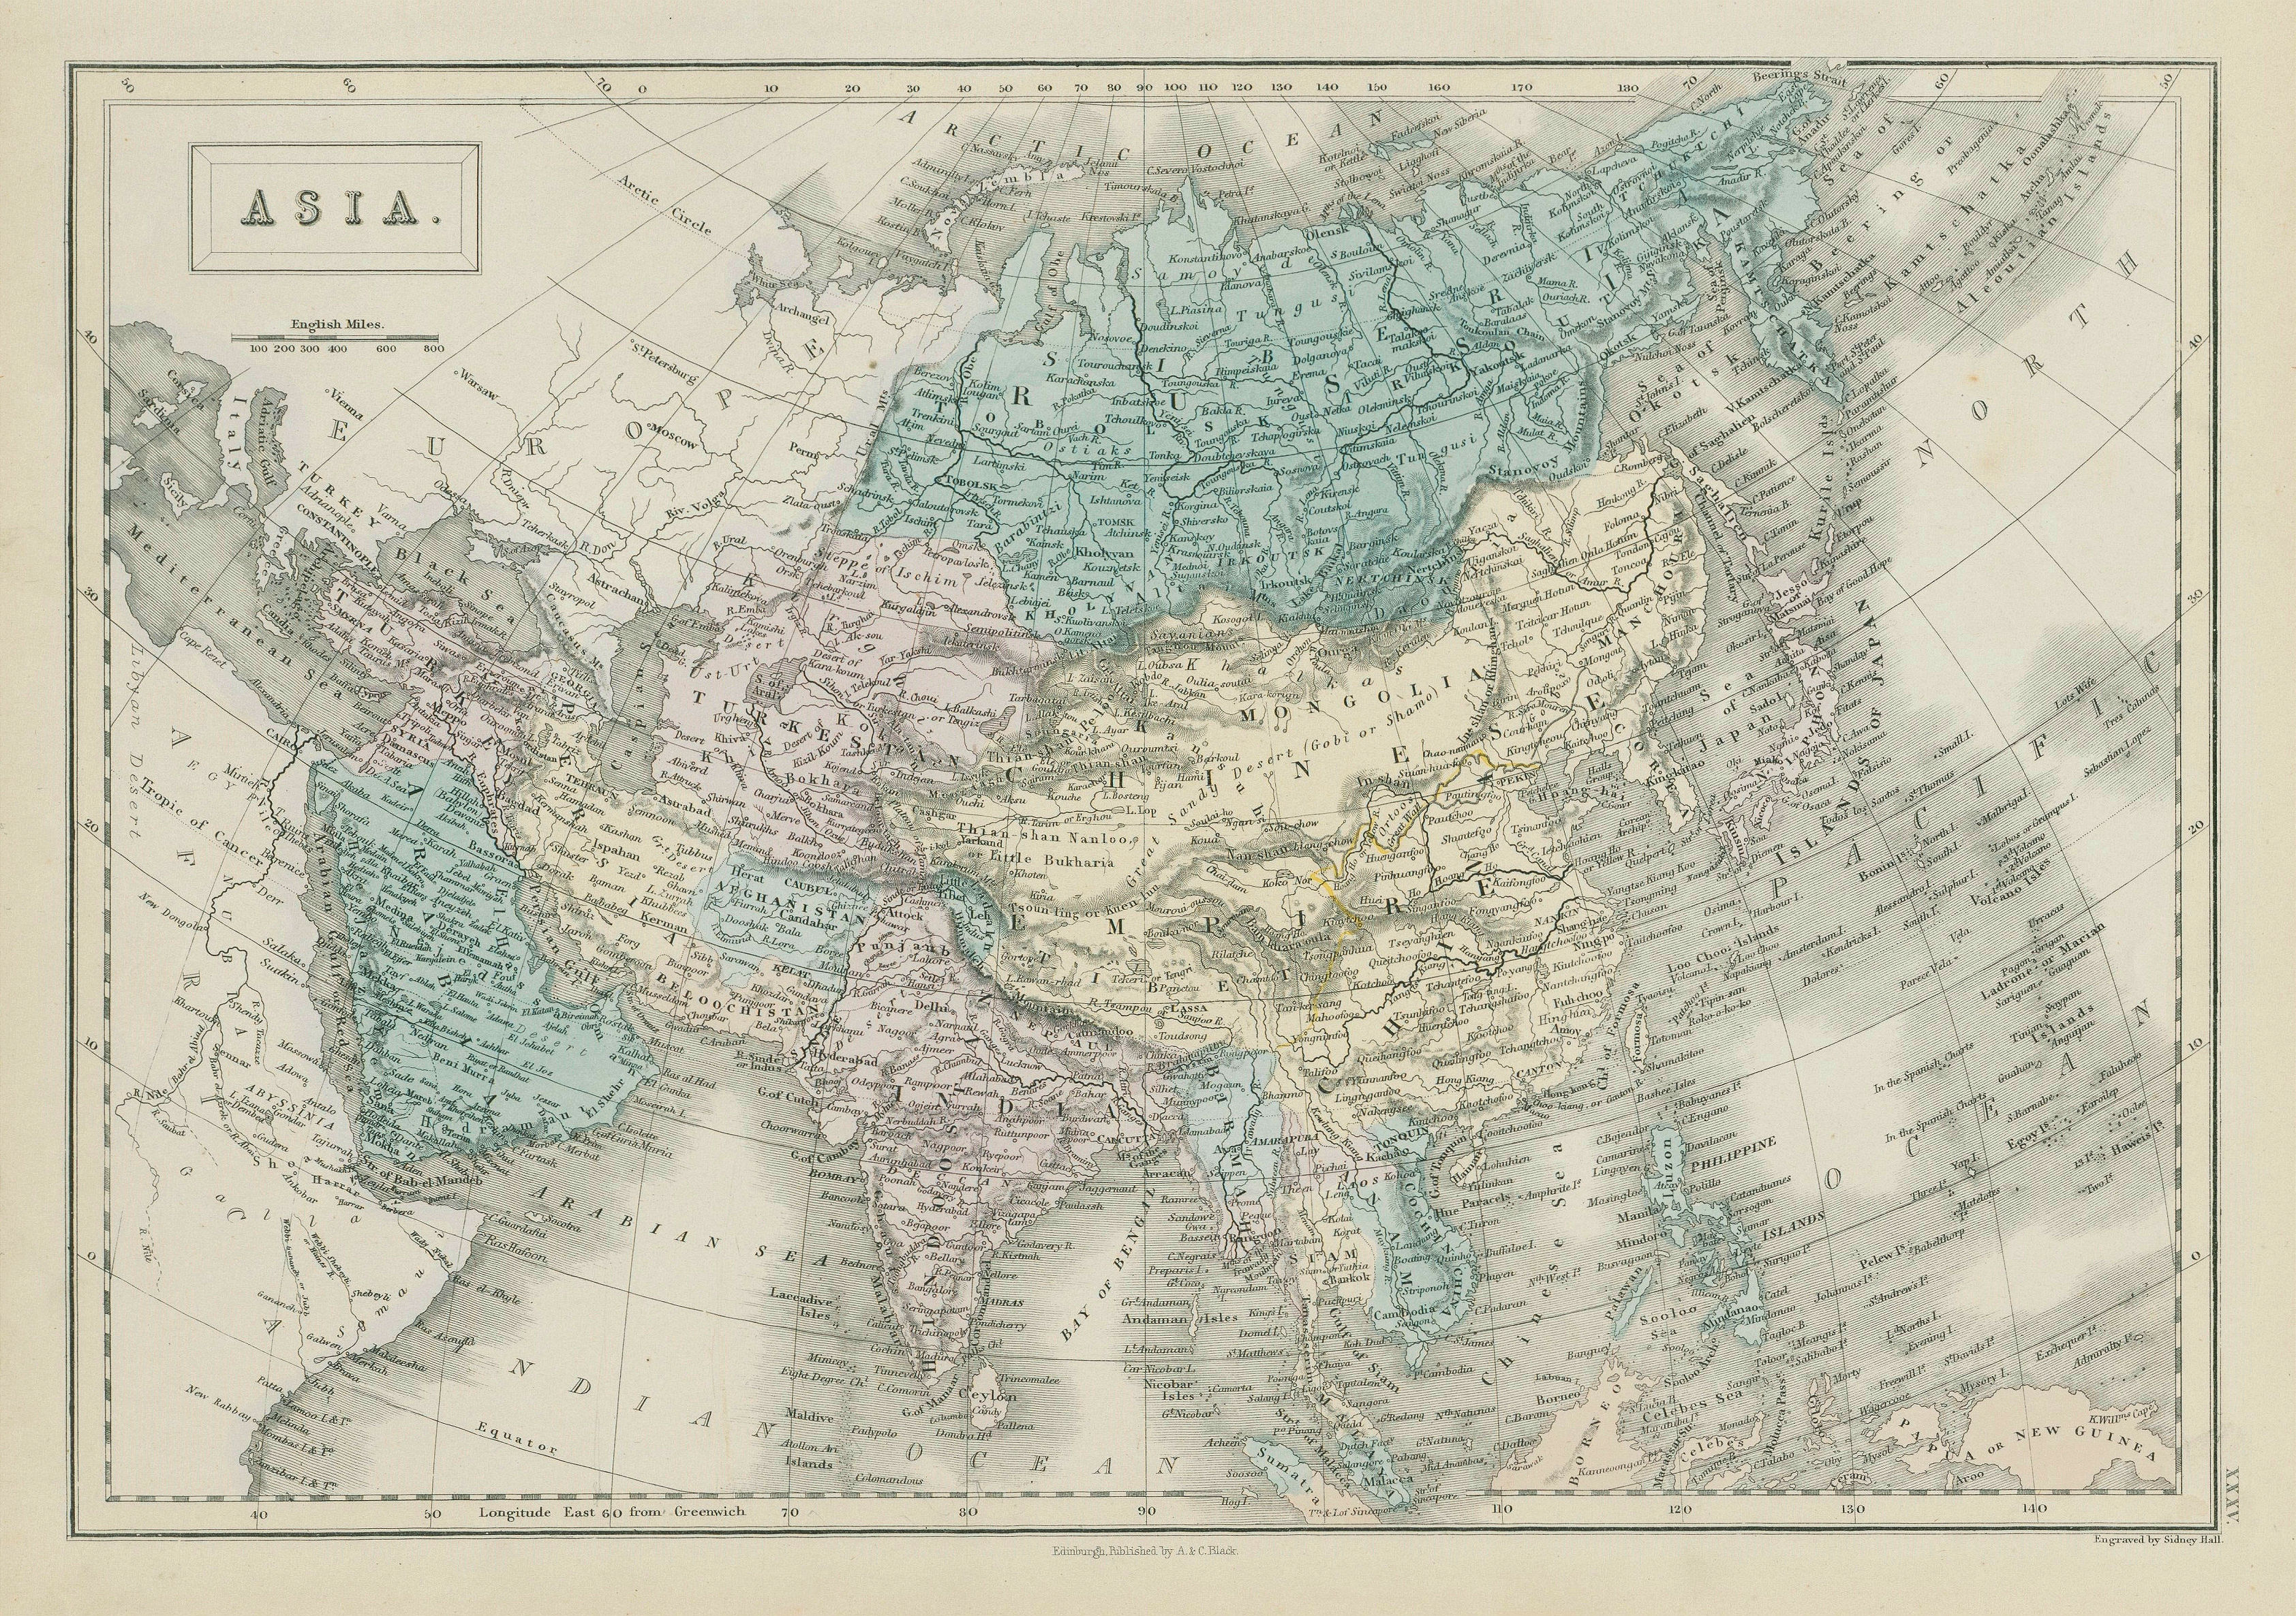 Associate Product Asia by SIDNEY HALL. Siam Birmah Cochin China Niphon Persia Arabia 1856 map